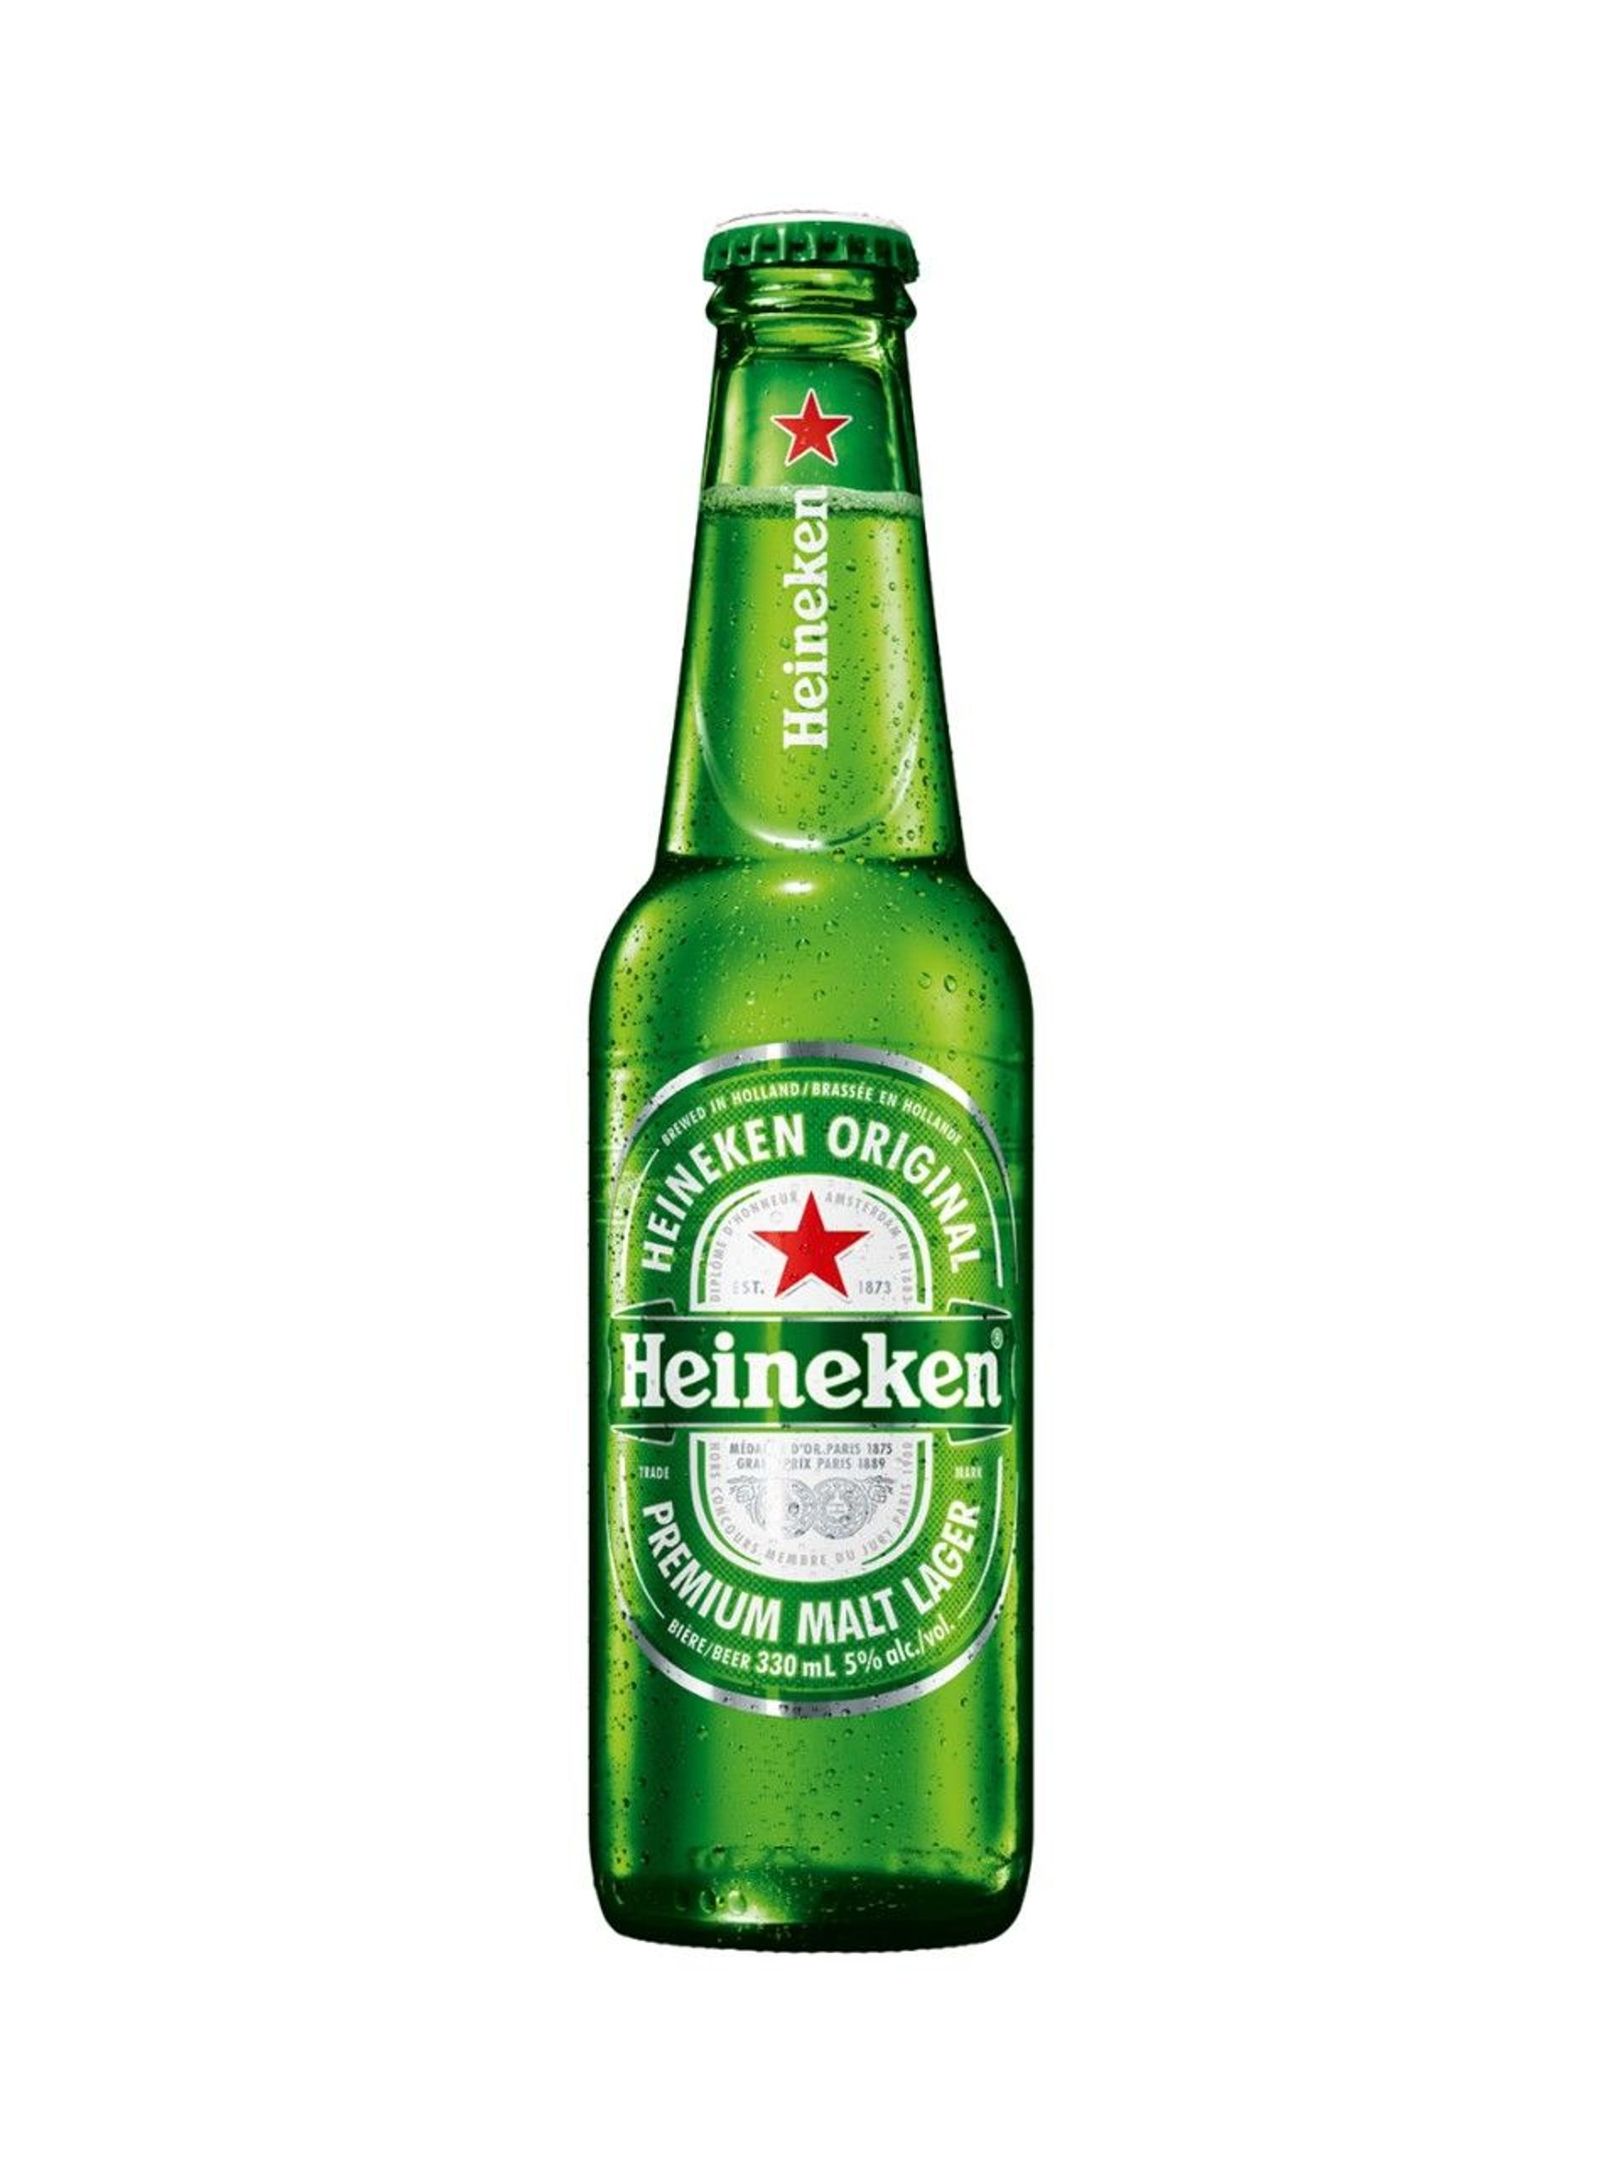 BTL HEINEKEN 341 mL  bottle, (5%ABV)